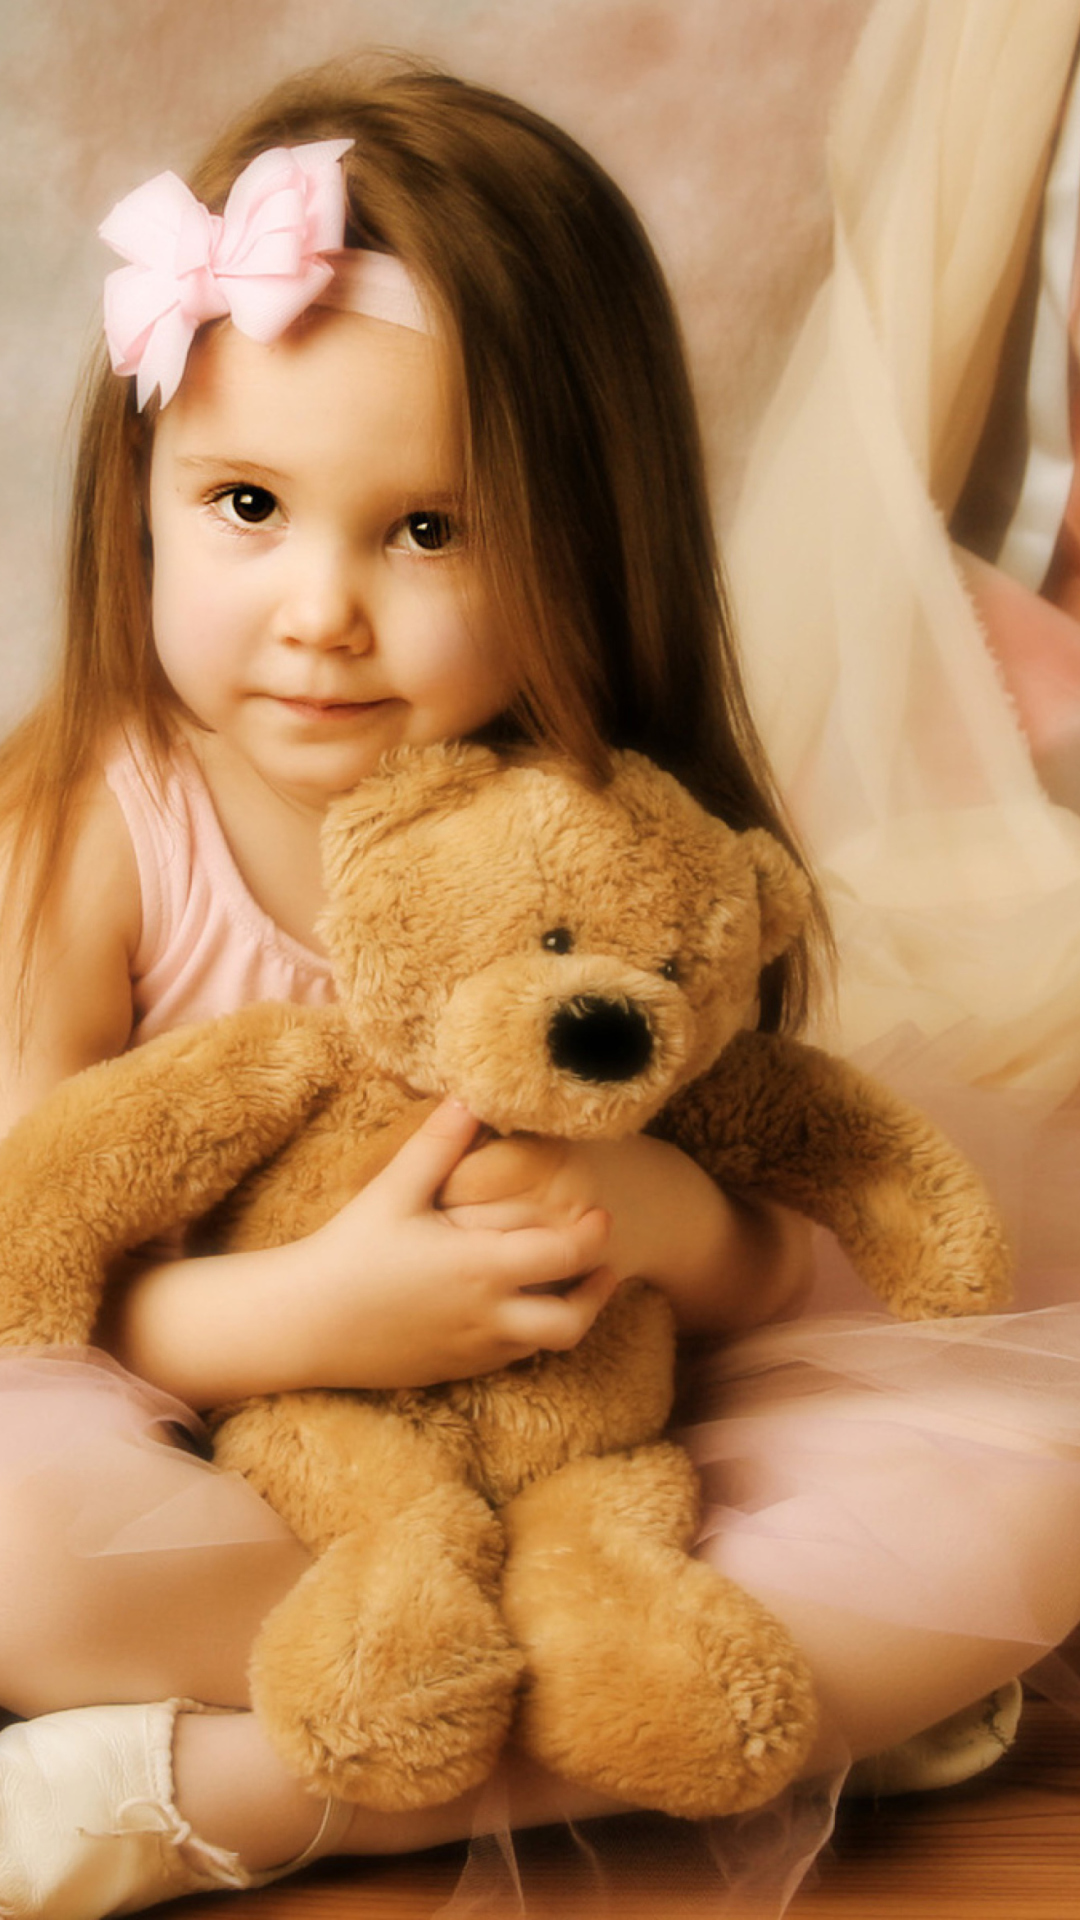 Cute Little Girl With Teddy Bear wallpaper 1080x1920